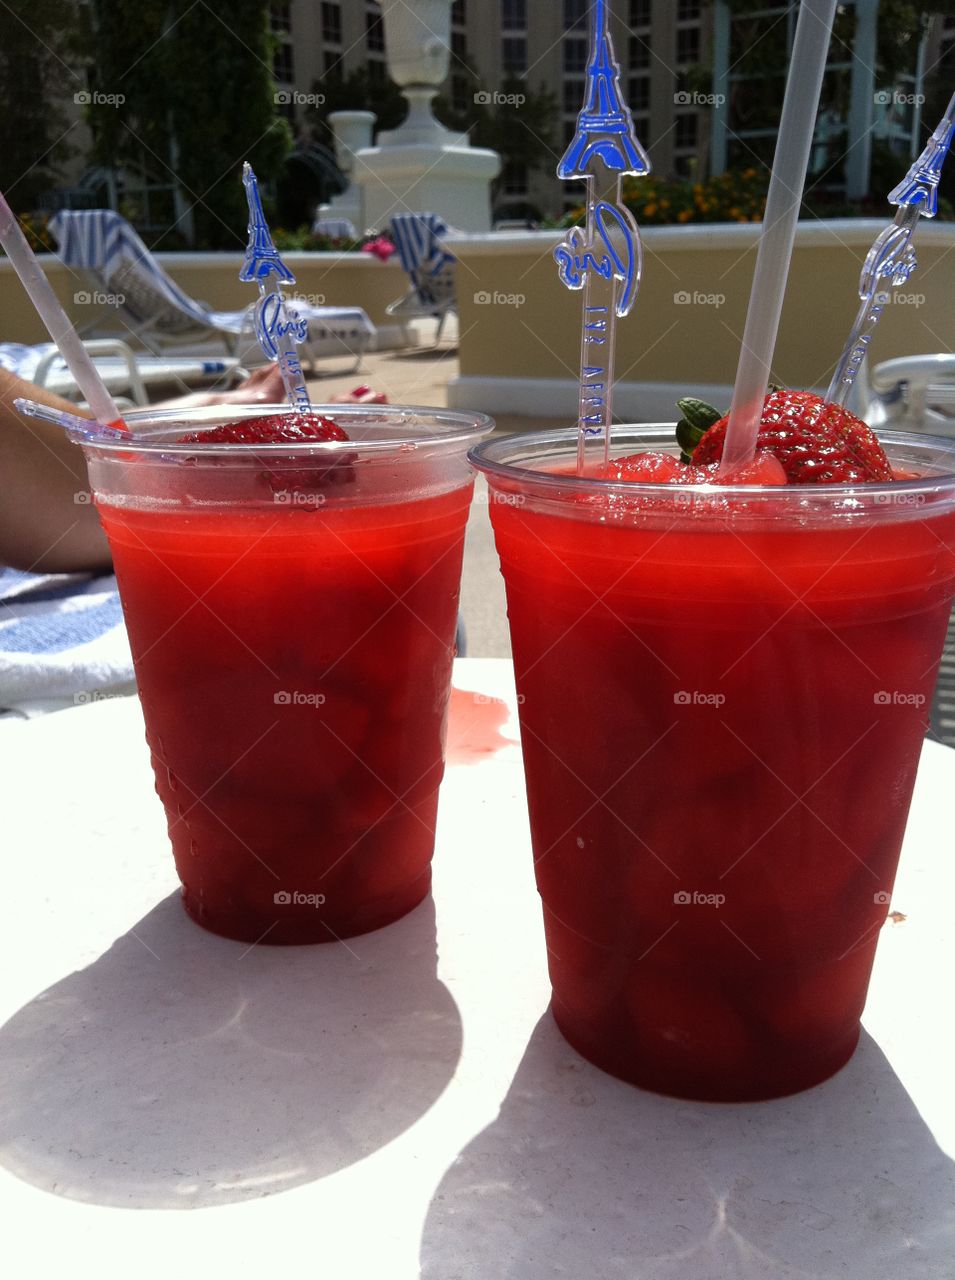 Strawberry daiquiris . Las Vegas drinks by the pool 